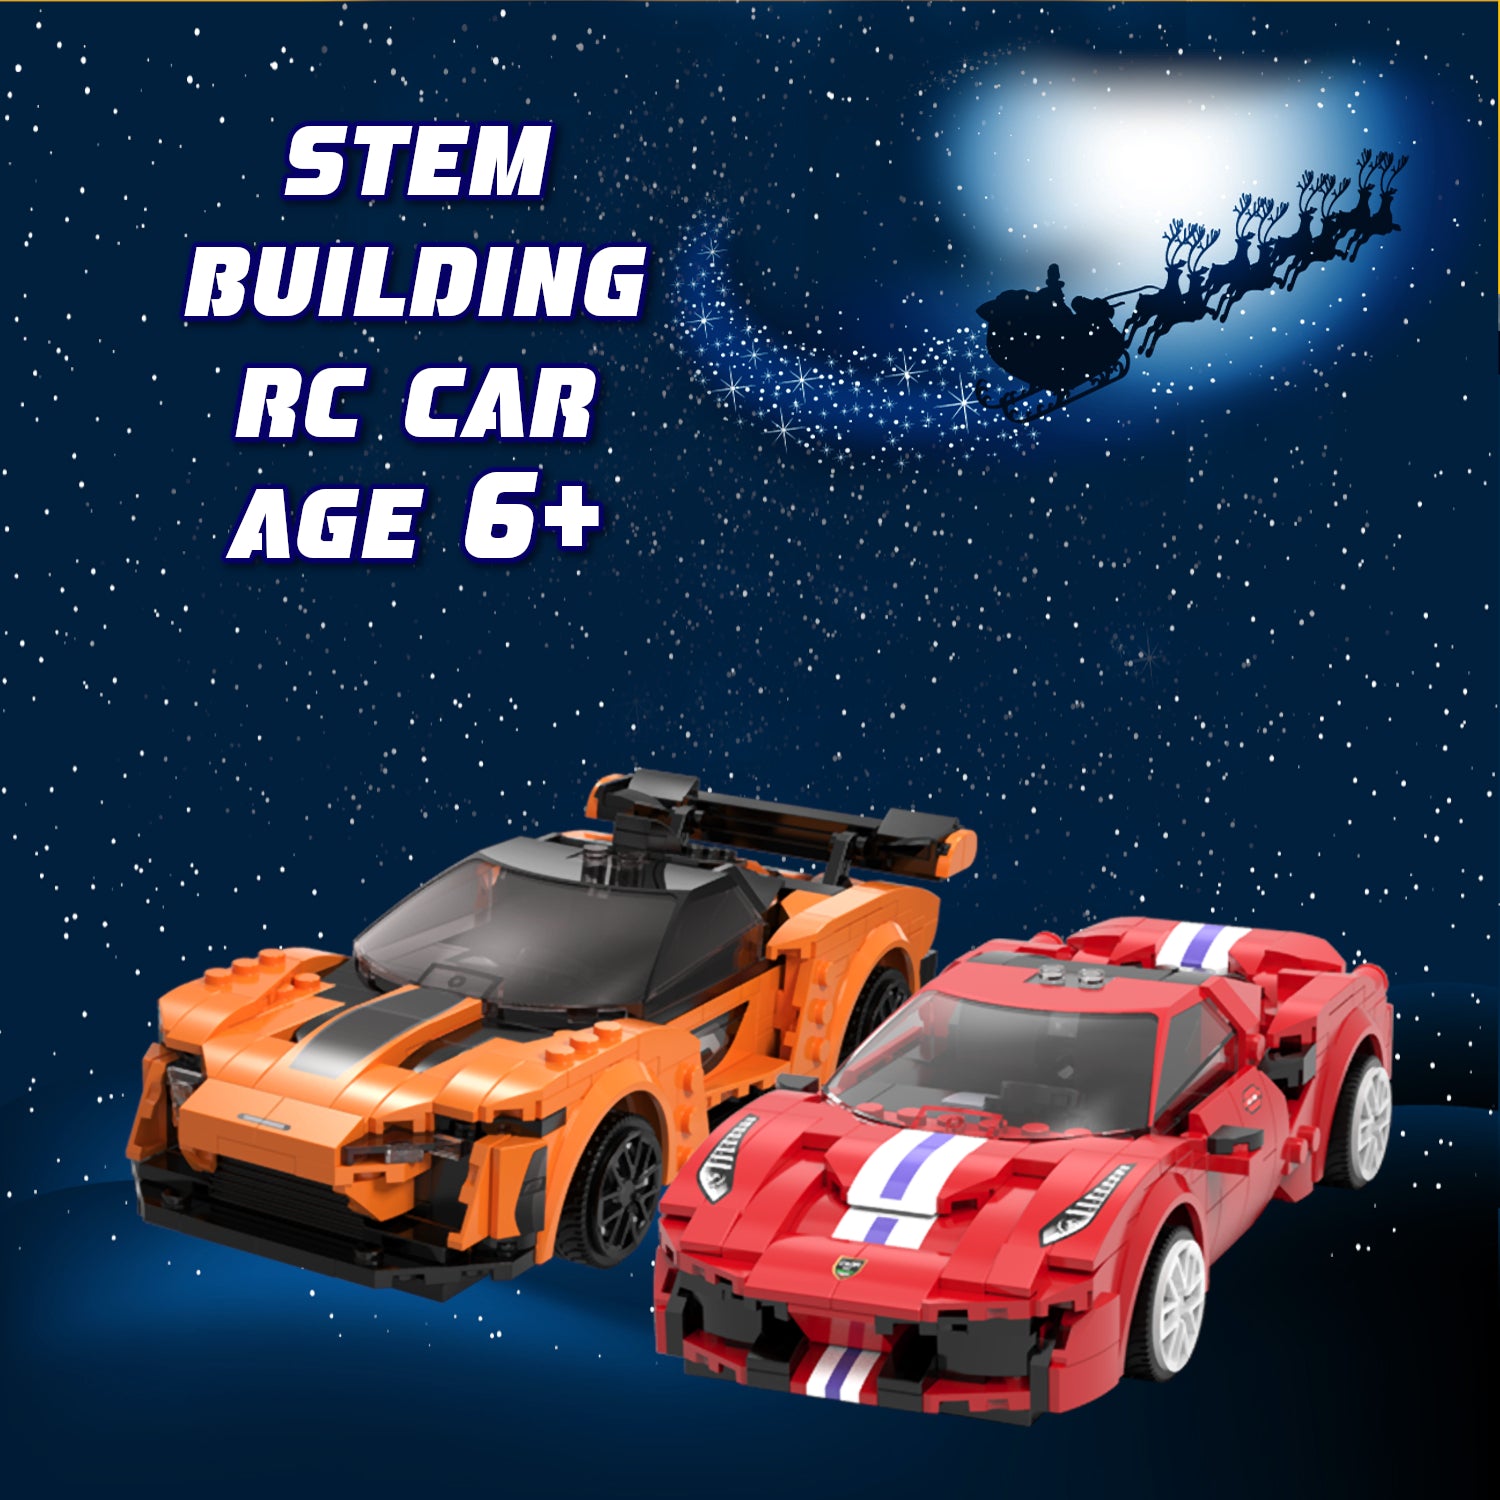 Age 6+ STEM Building Blocks RC cars